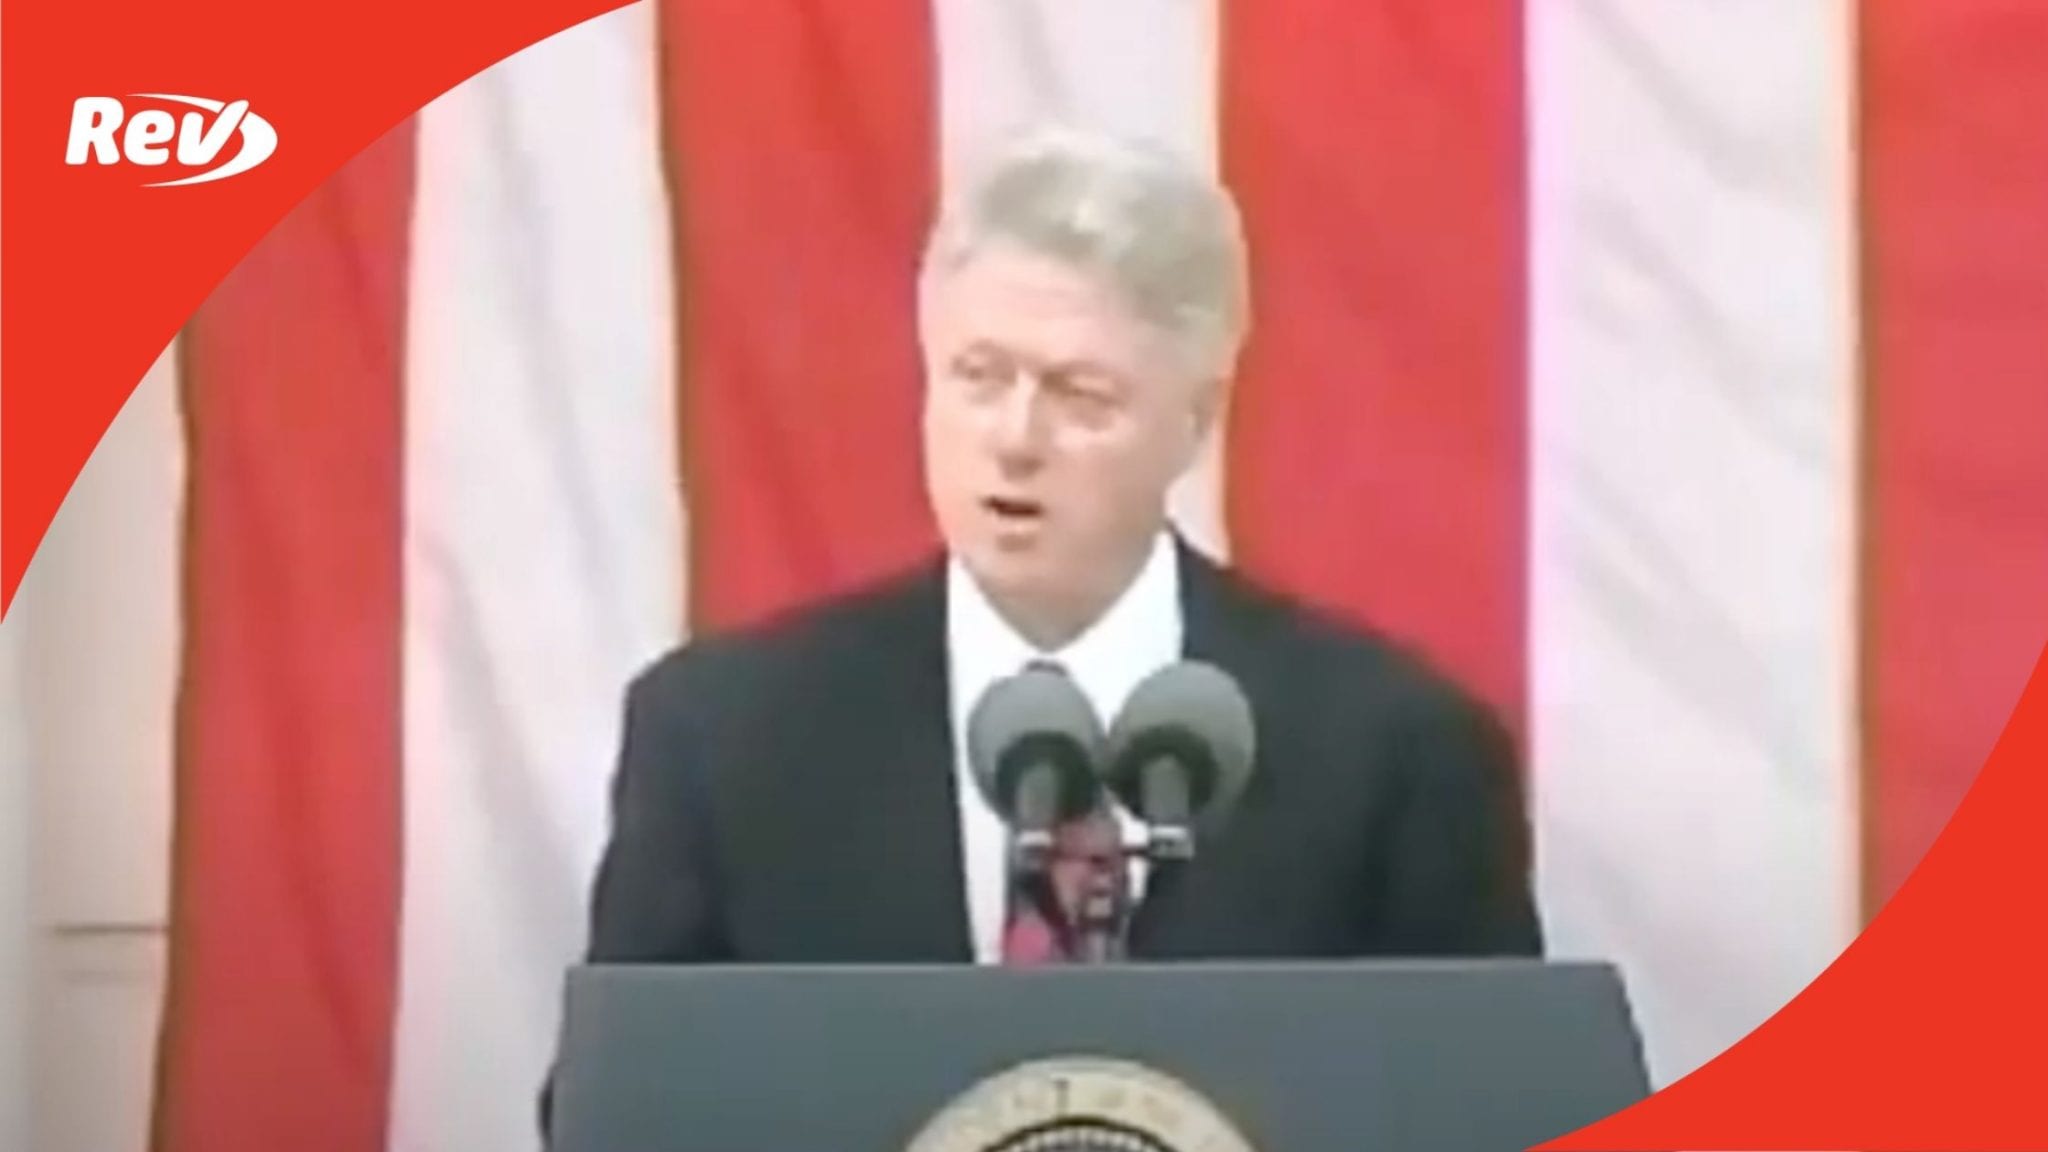 President Bill Clinton Memorial Day Speech 2000